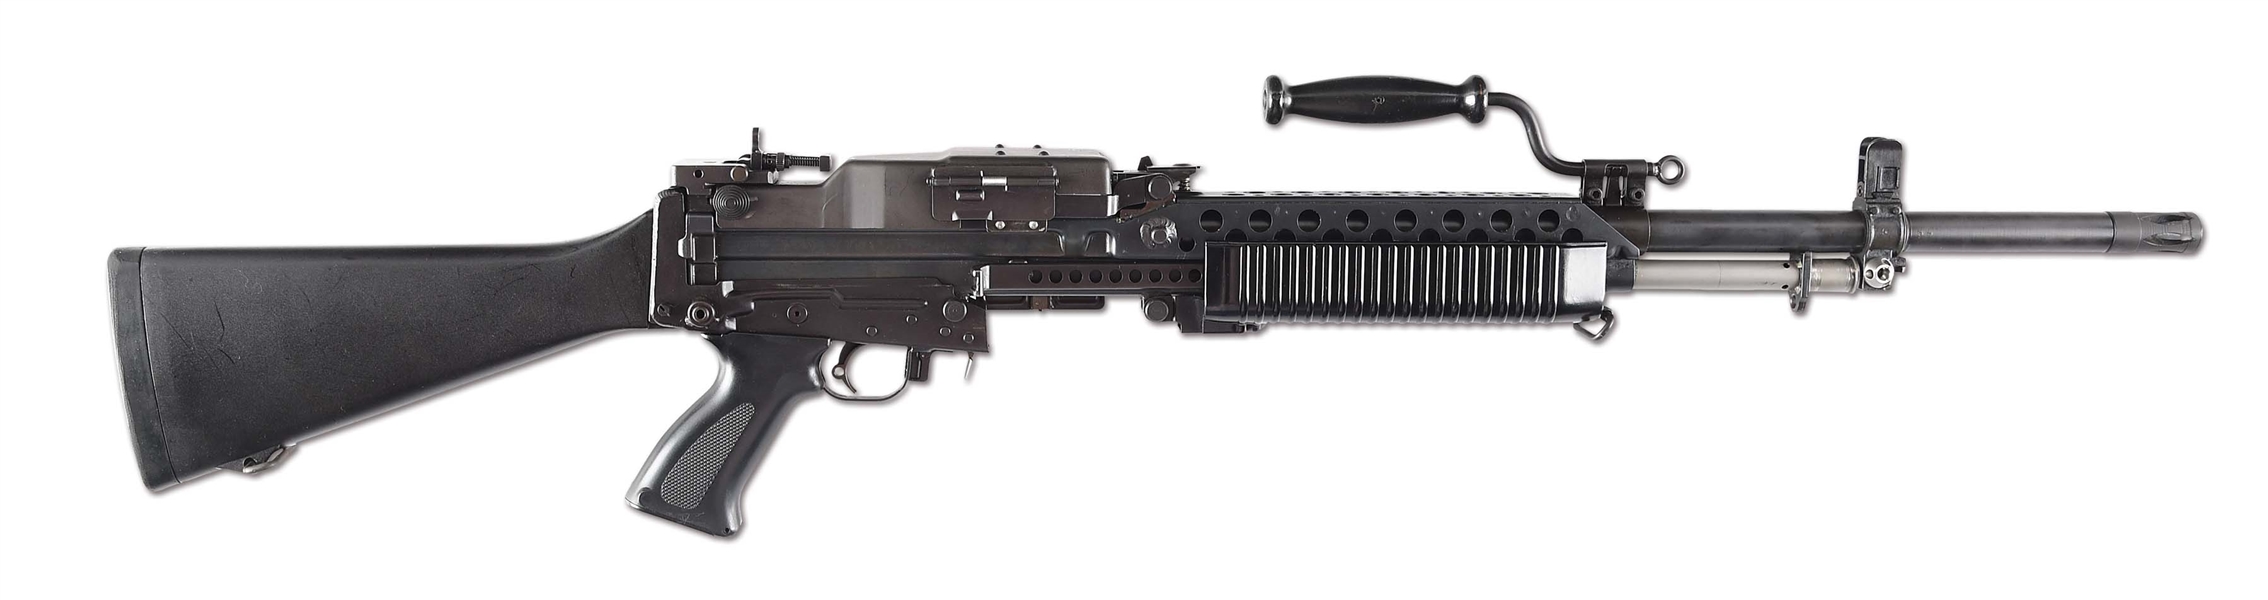 (N) KNIGHTS ARMAMENT COMPANY STONER MODEL 63A BELT-FED MACHINE GUN (FULLY TRANSFERABLE).